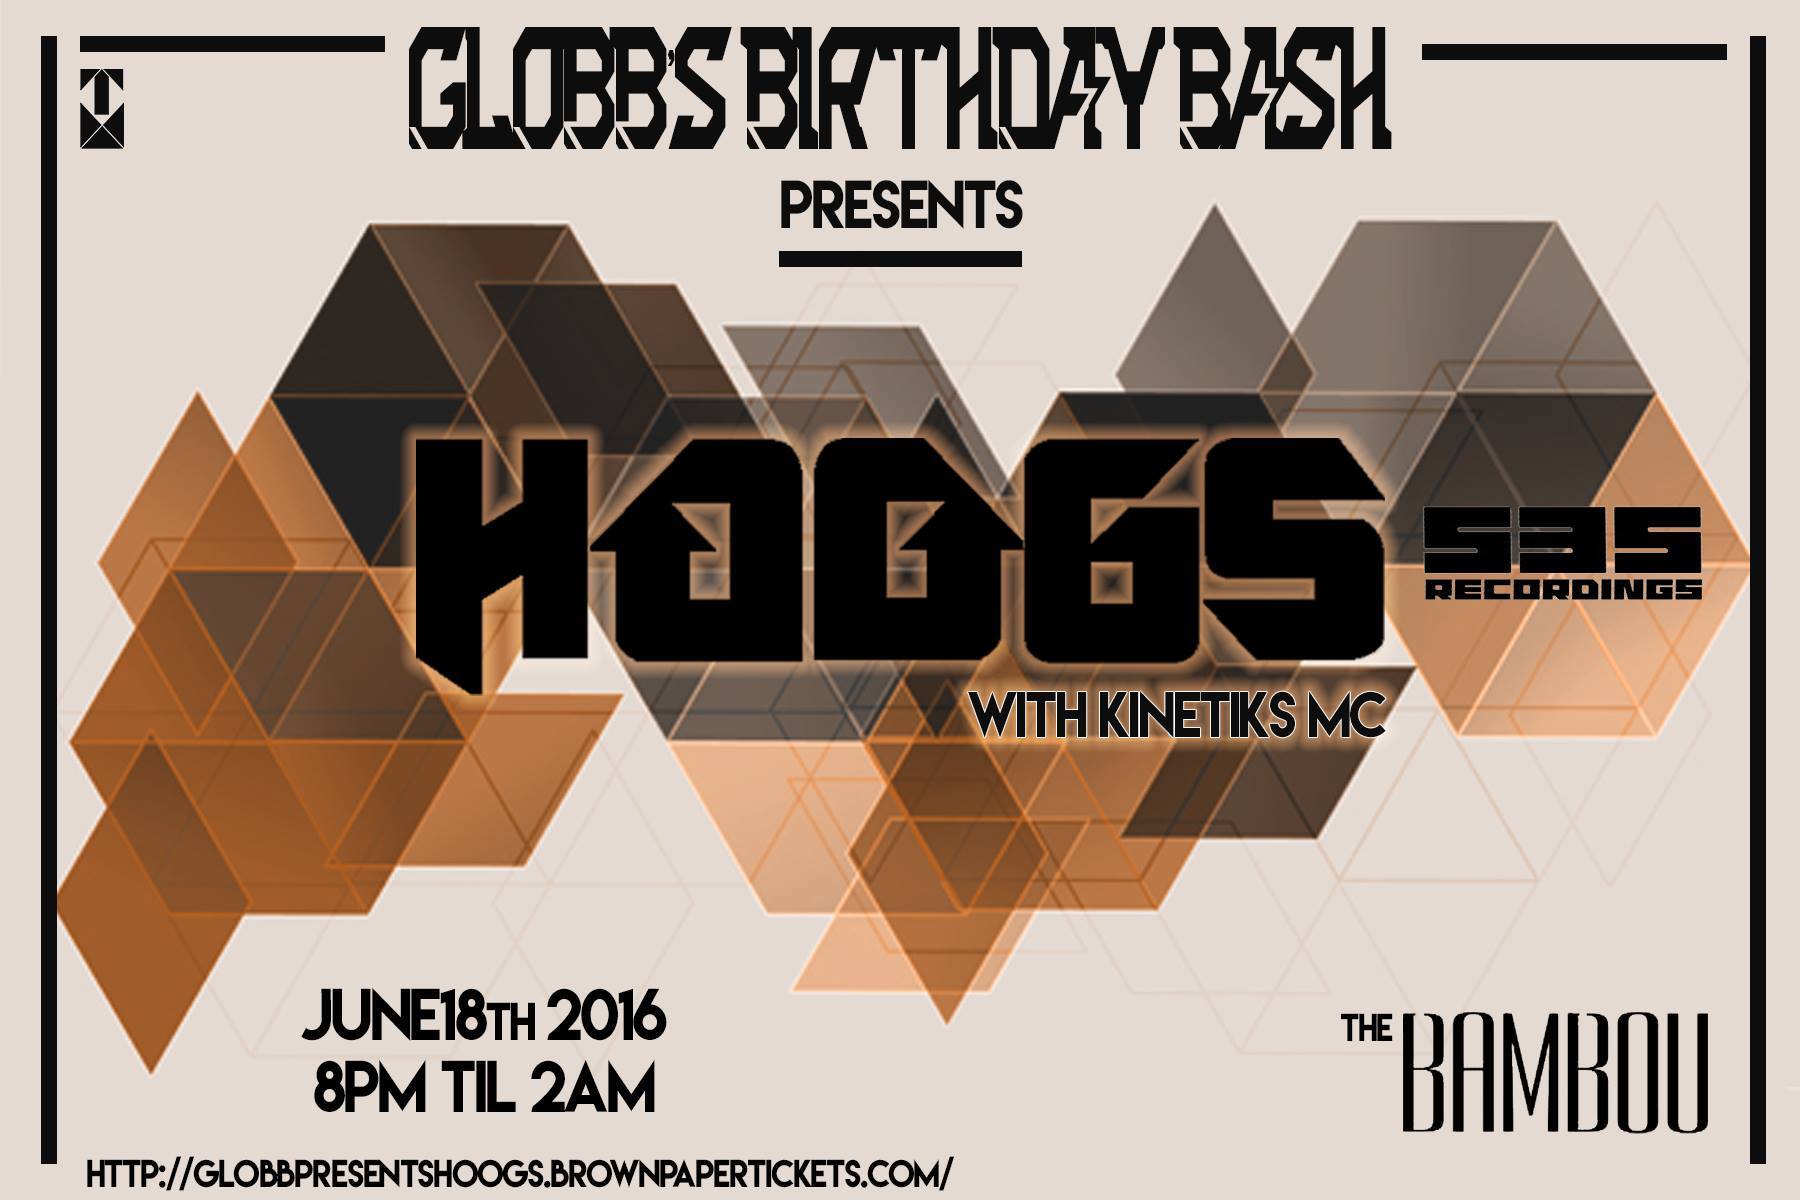 Globb's Birthday Bash presents: Hoogs @ Bambou - 6/18!